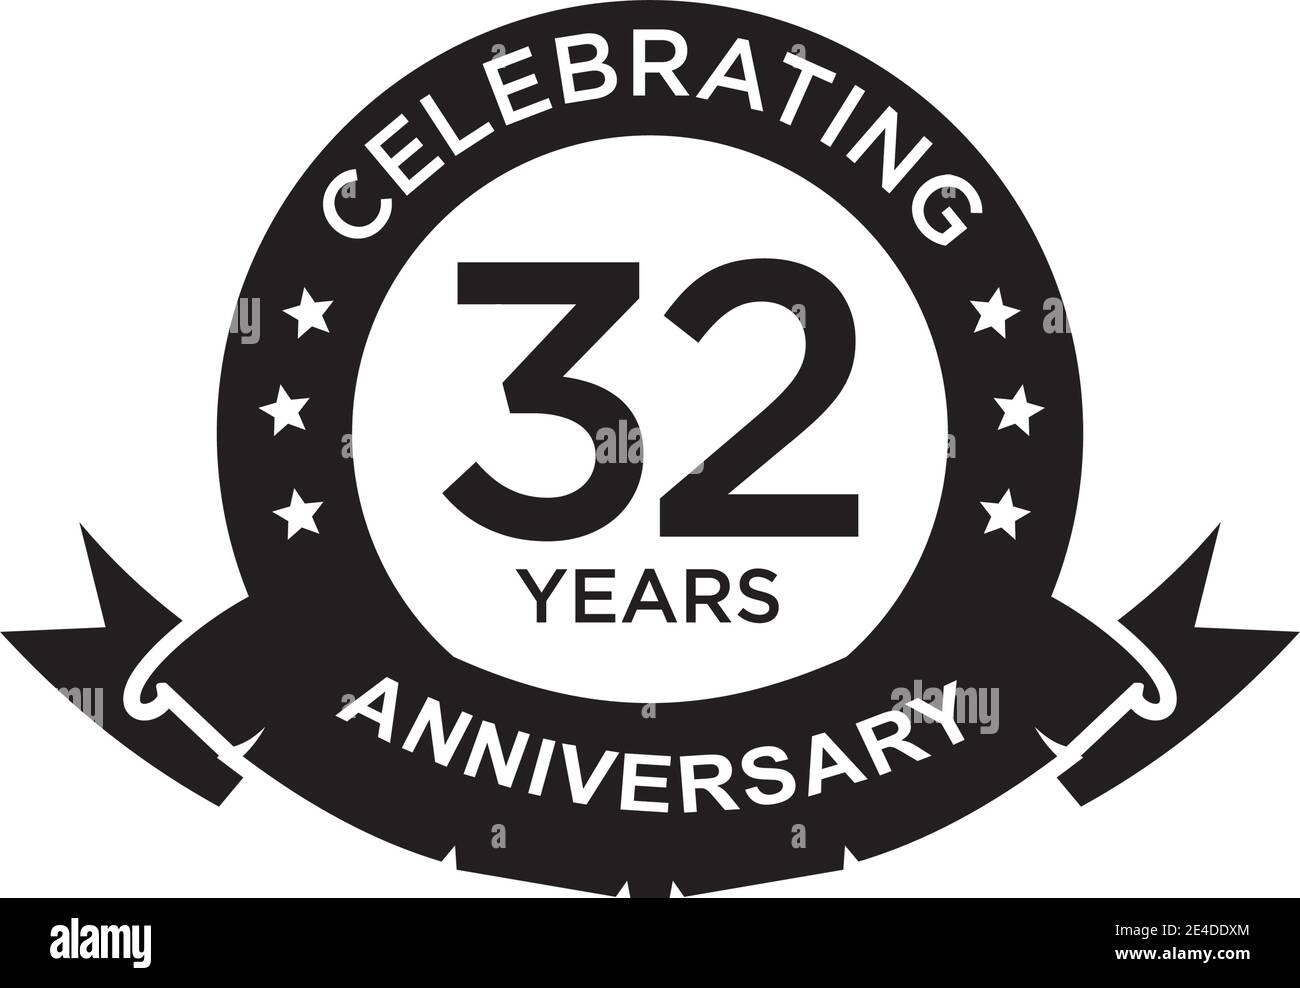 32nd year celebrating anniversary logo design template Stock Vector